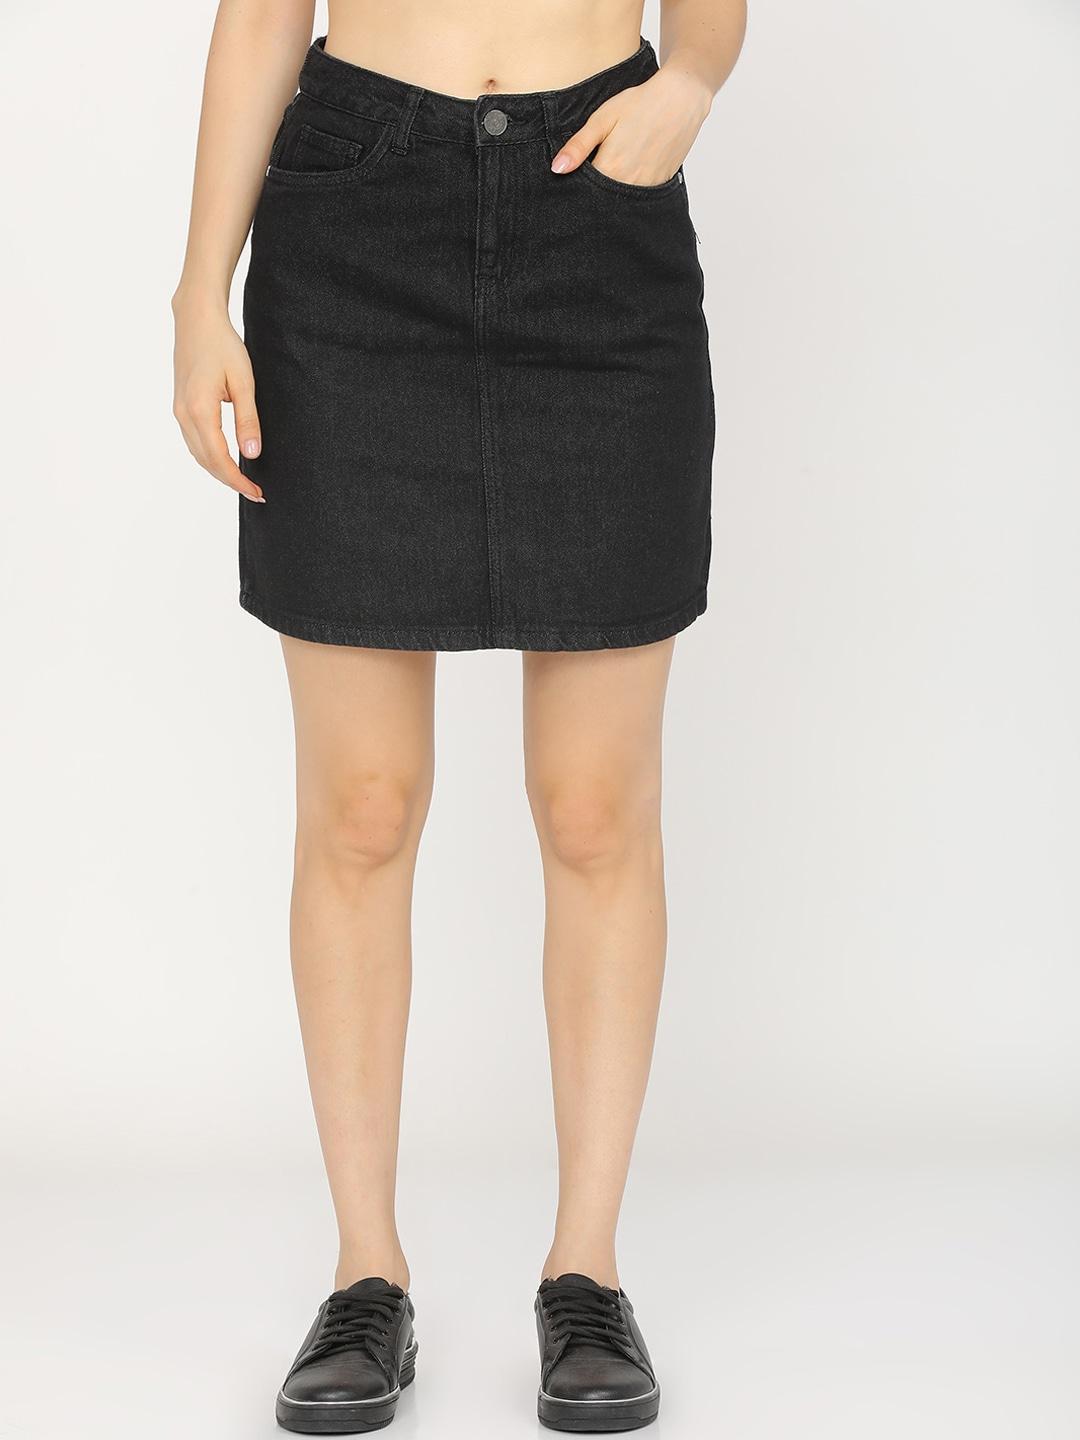 tokyo-talkies-women-black-solid-denim-pure-cotton-a-line-mini-skirt